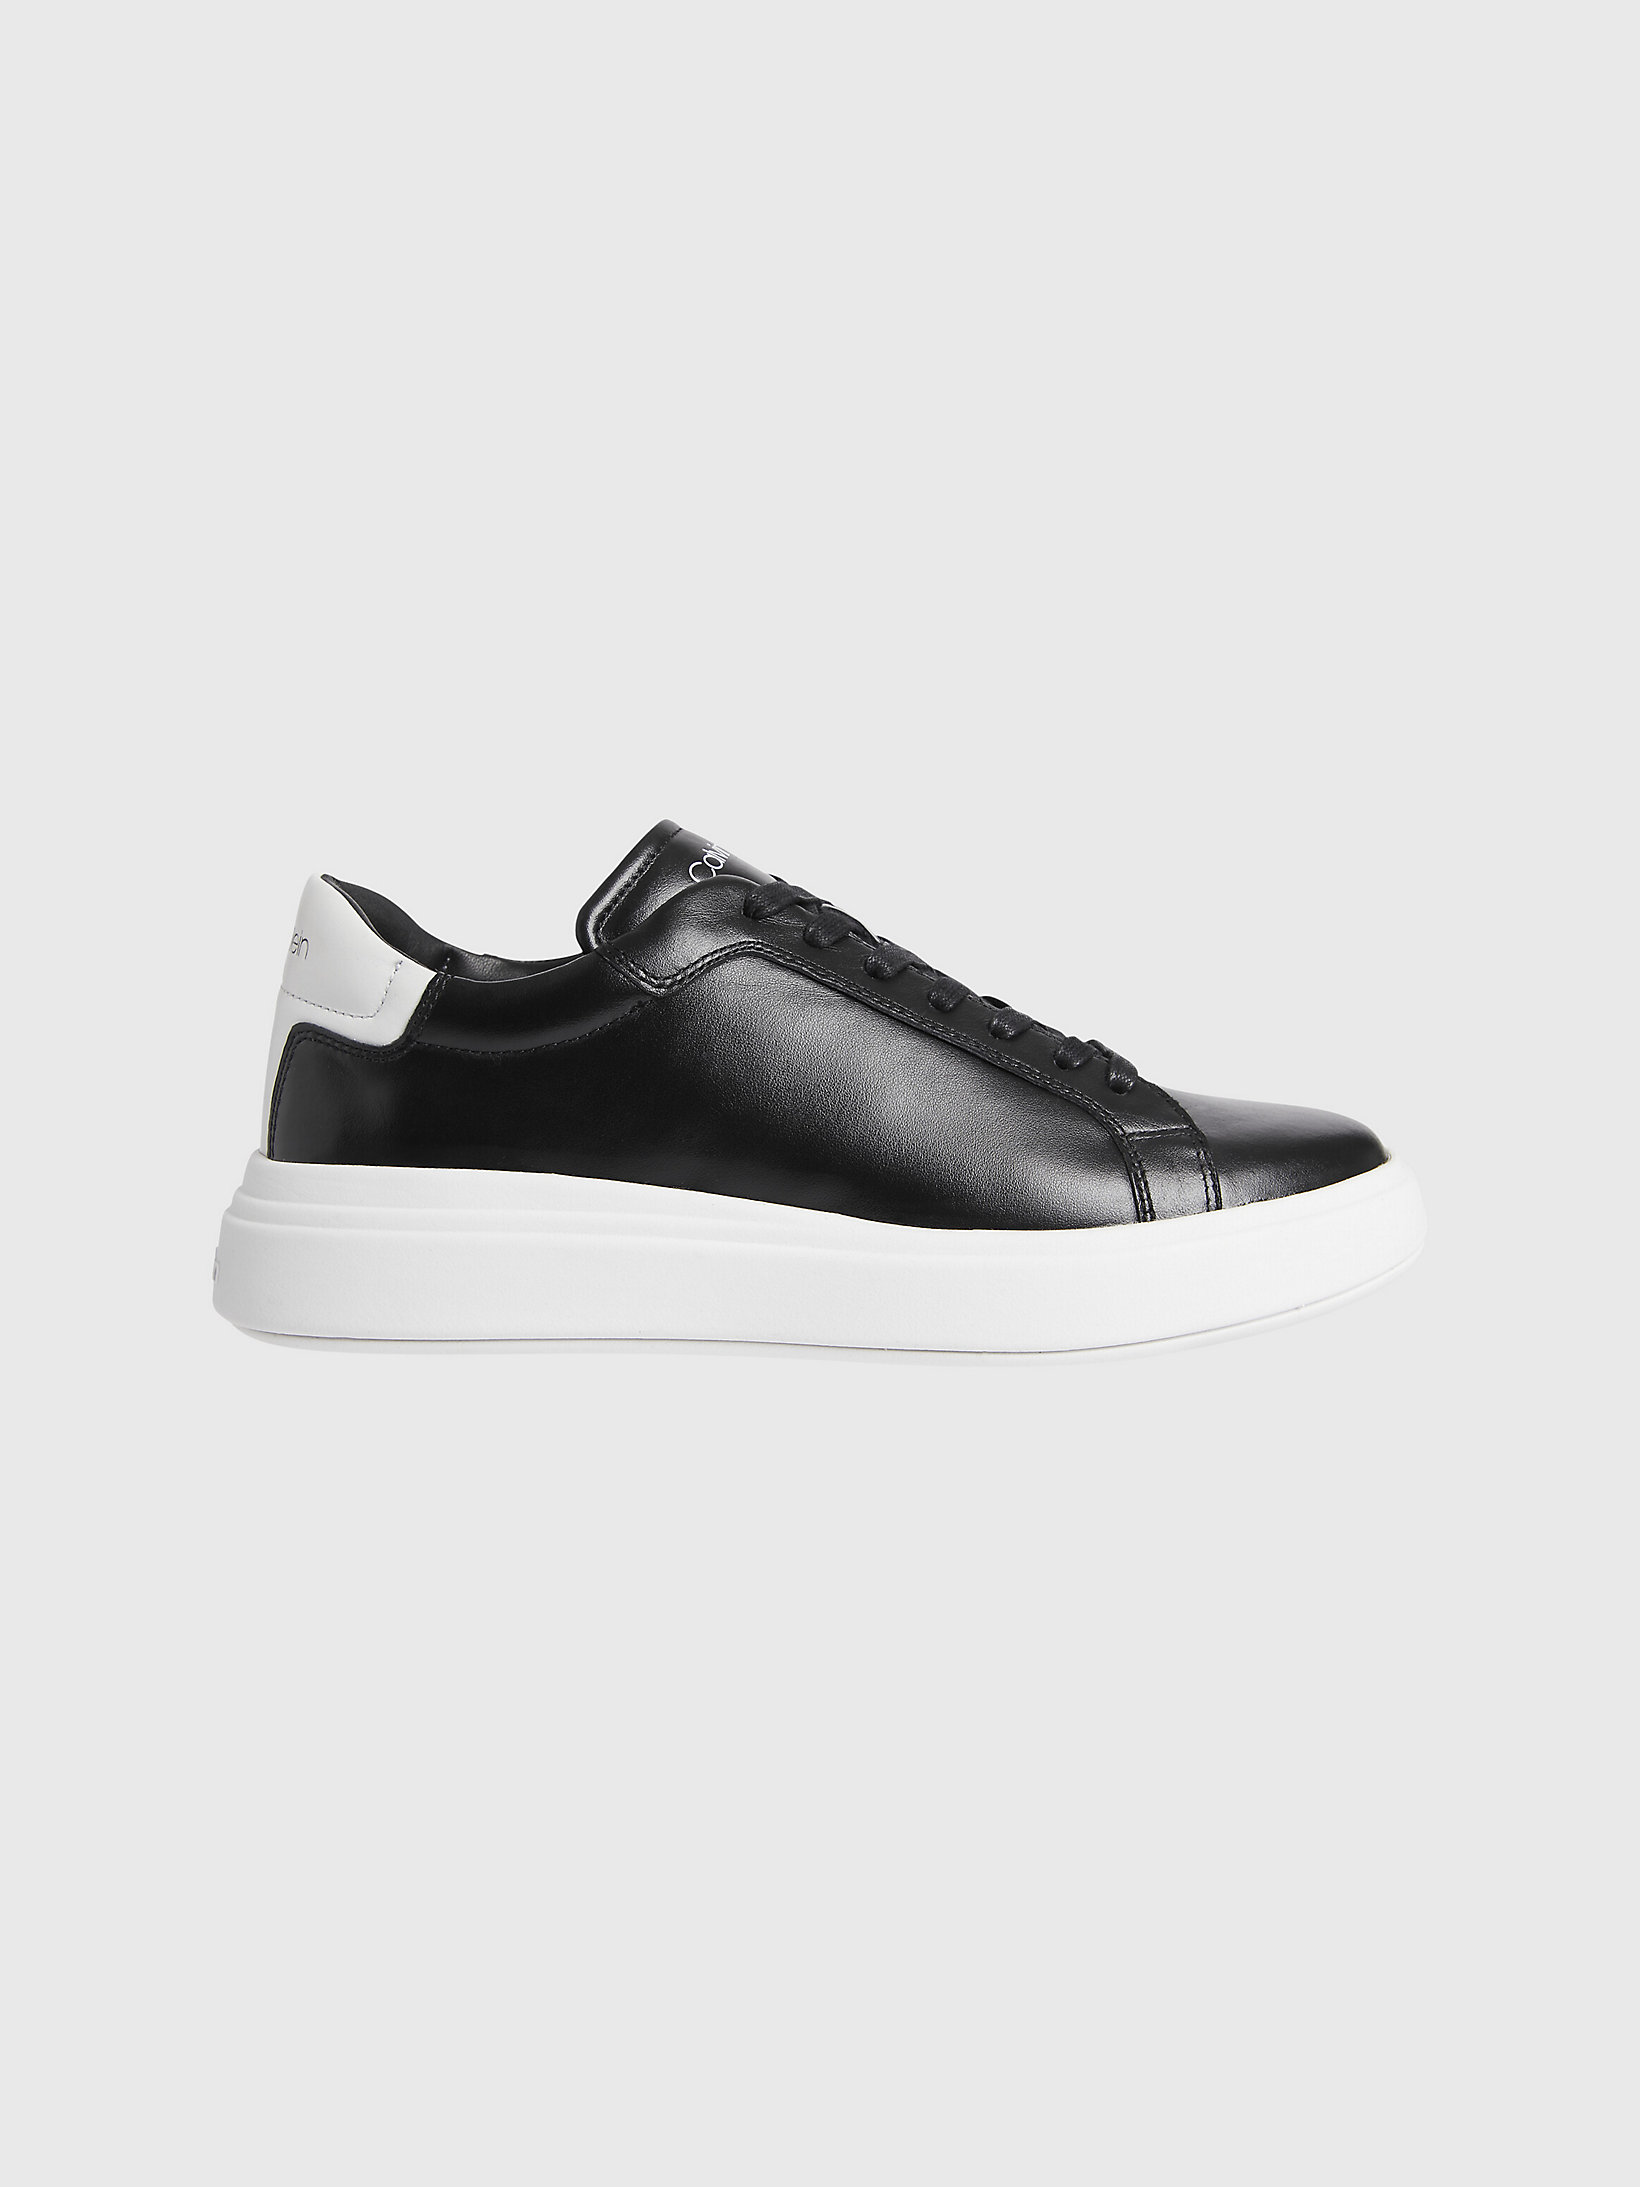 Sneaker In Pelle > Black/white > undefined uomo > Calvin Klein